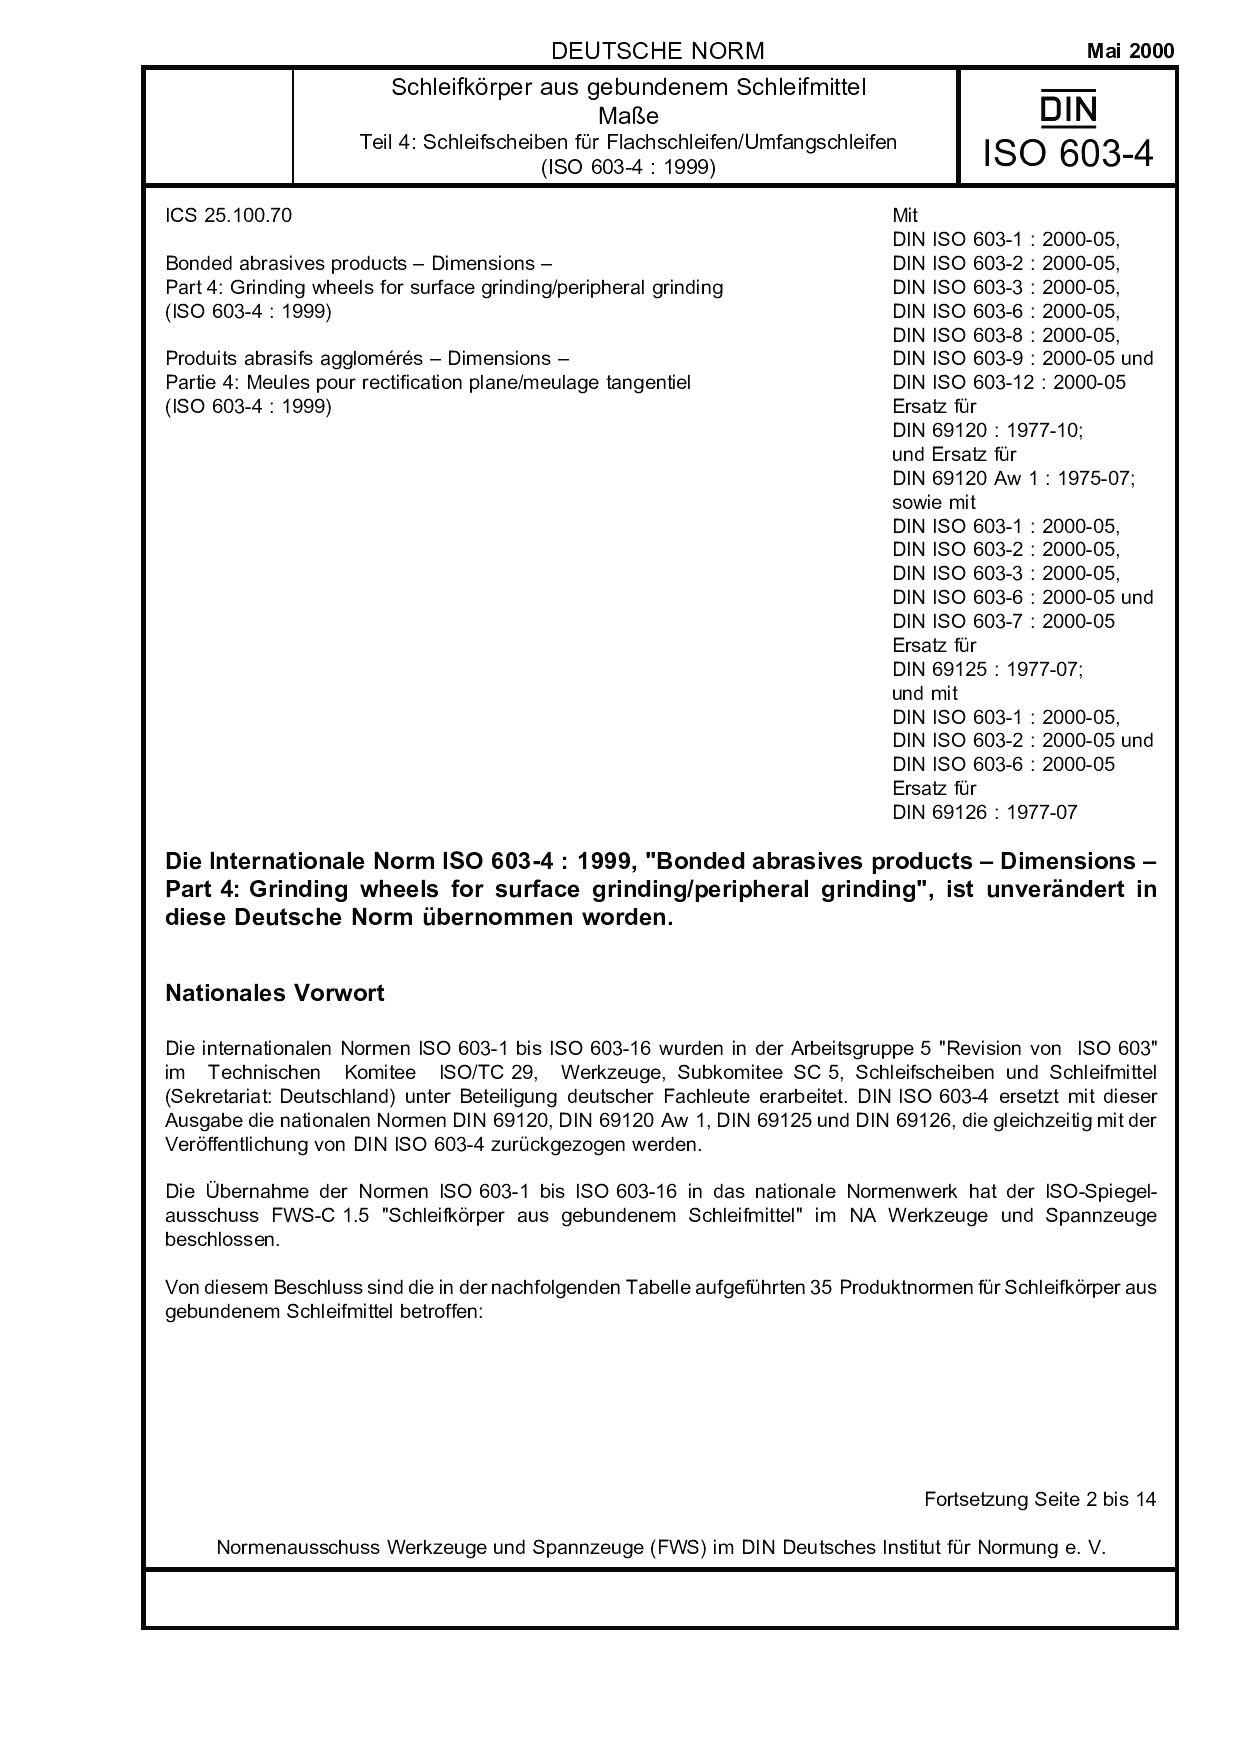 DIN ISO 603-4:2000